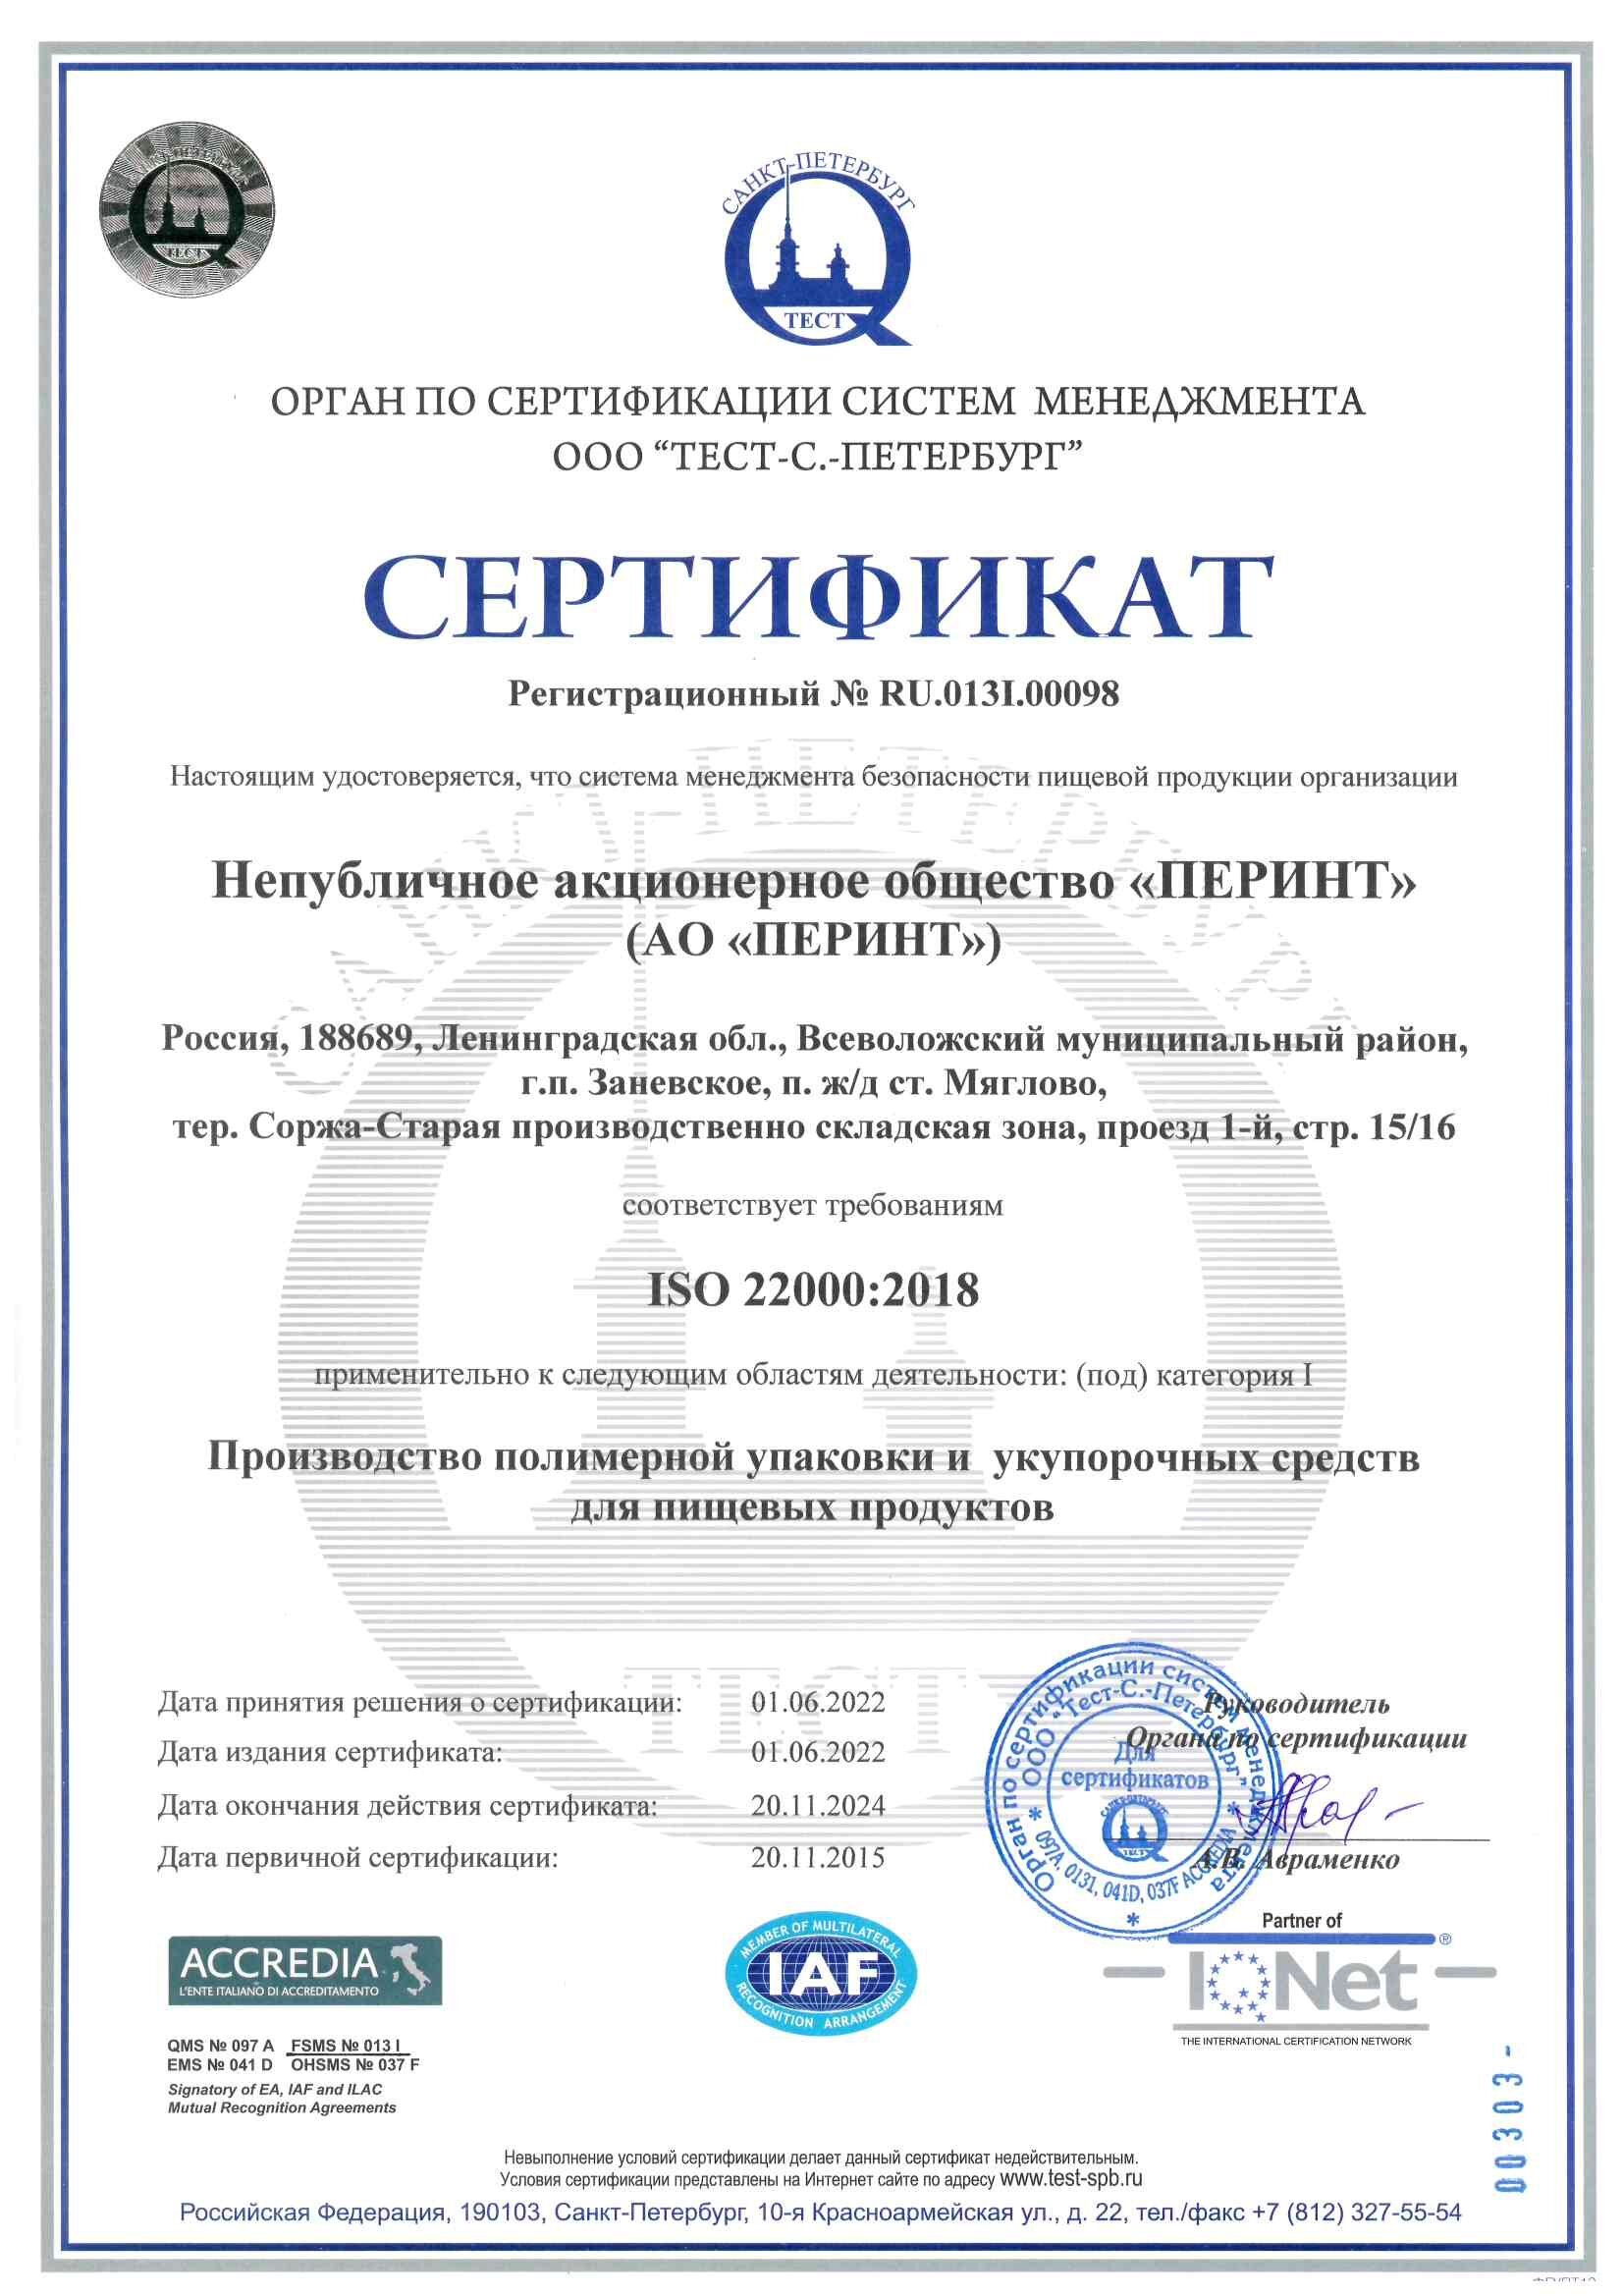 Сертификат соответствия СМ БПП требованиям ISO 22000-2018 ACCREDIA_2022